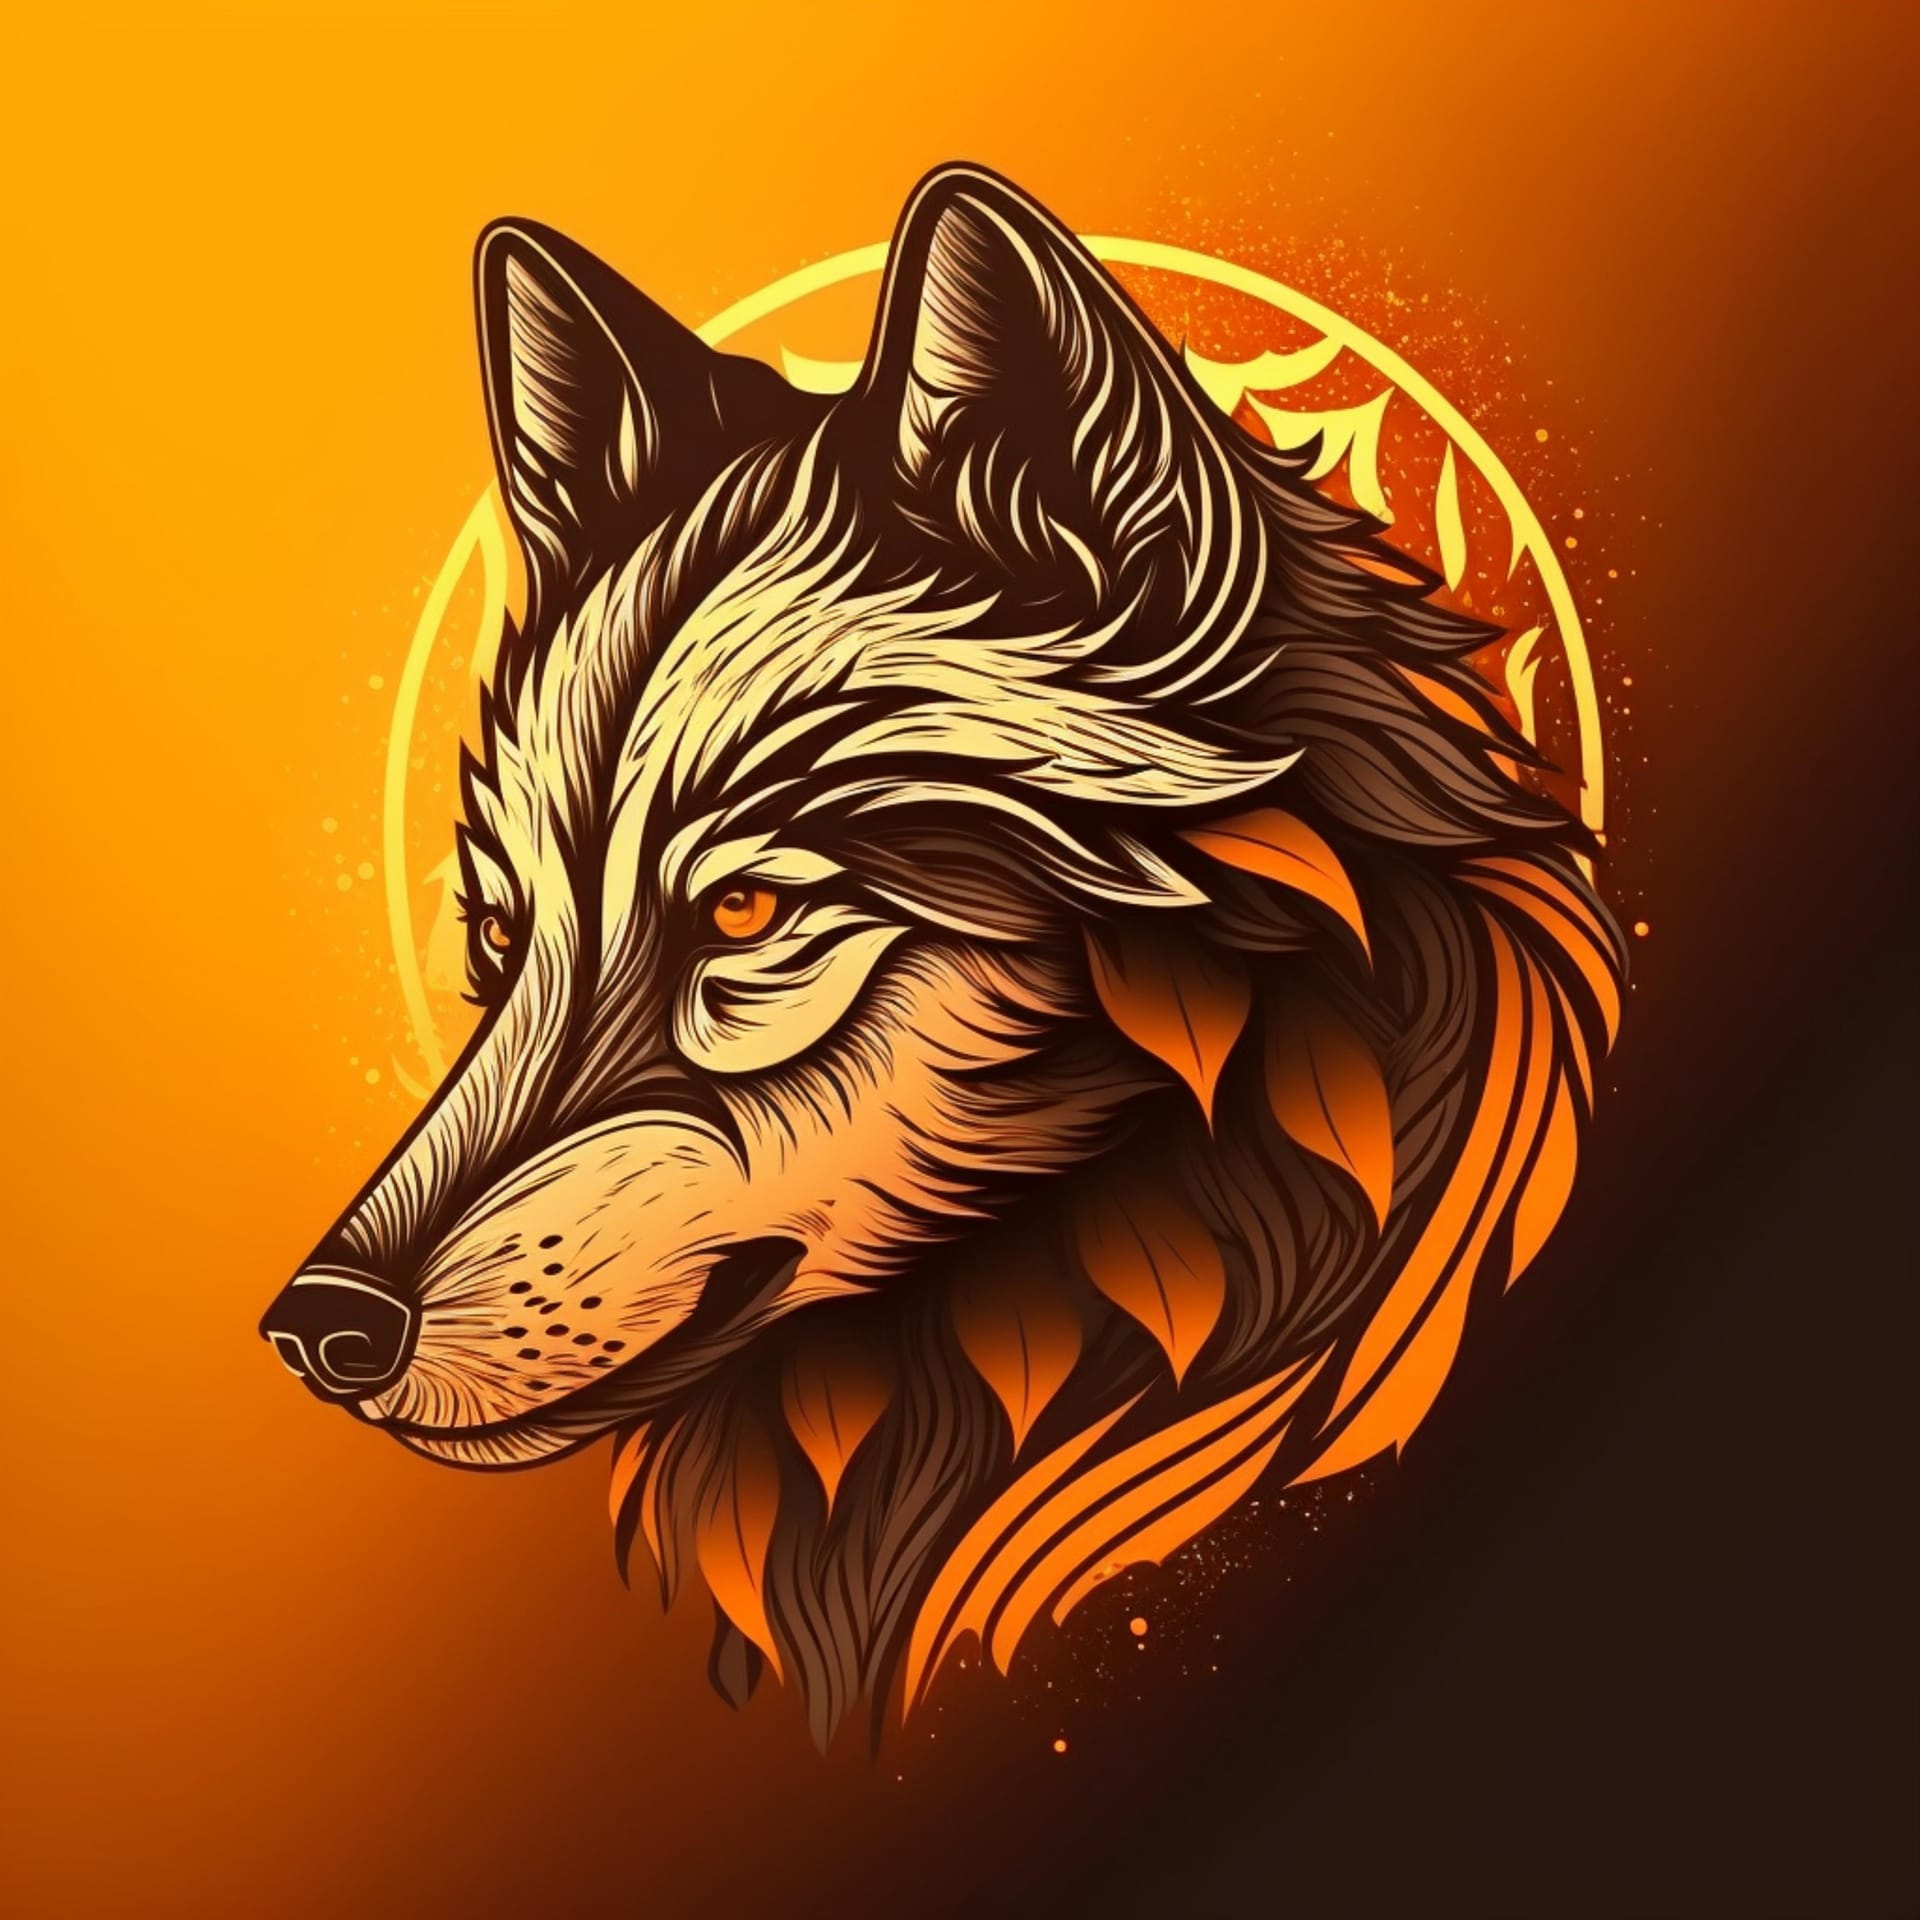 Wolf logo design nice image wolf profile pic